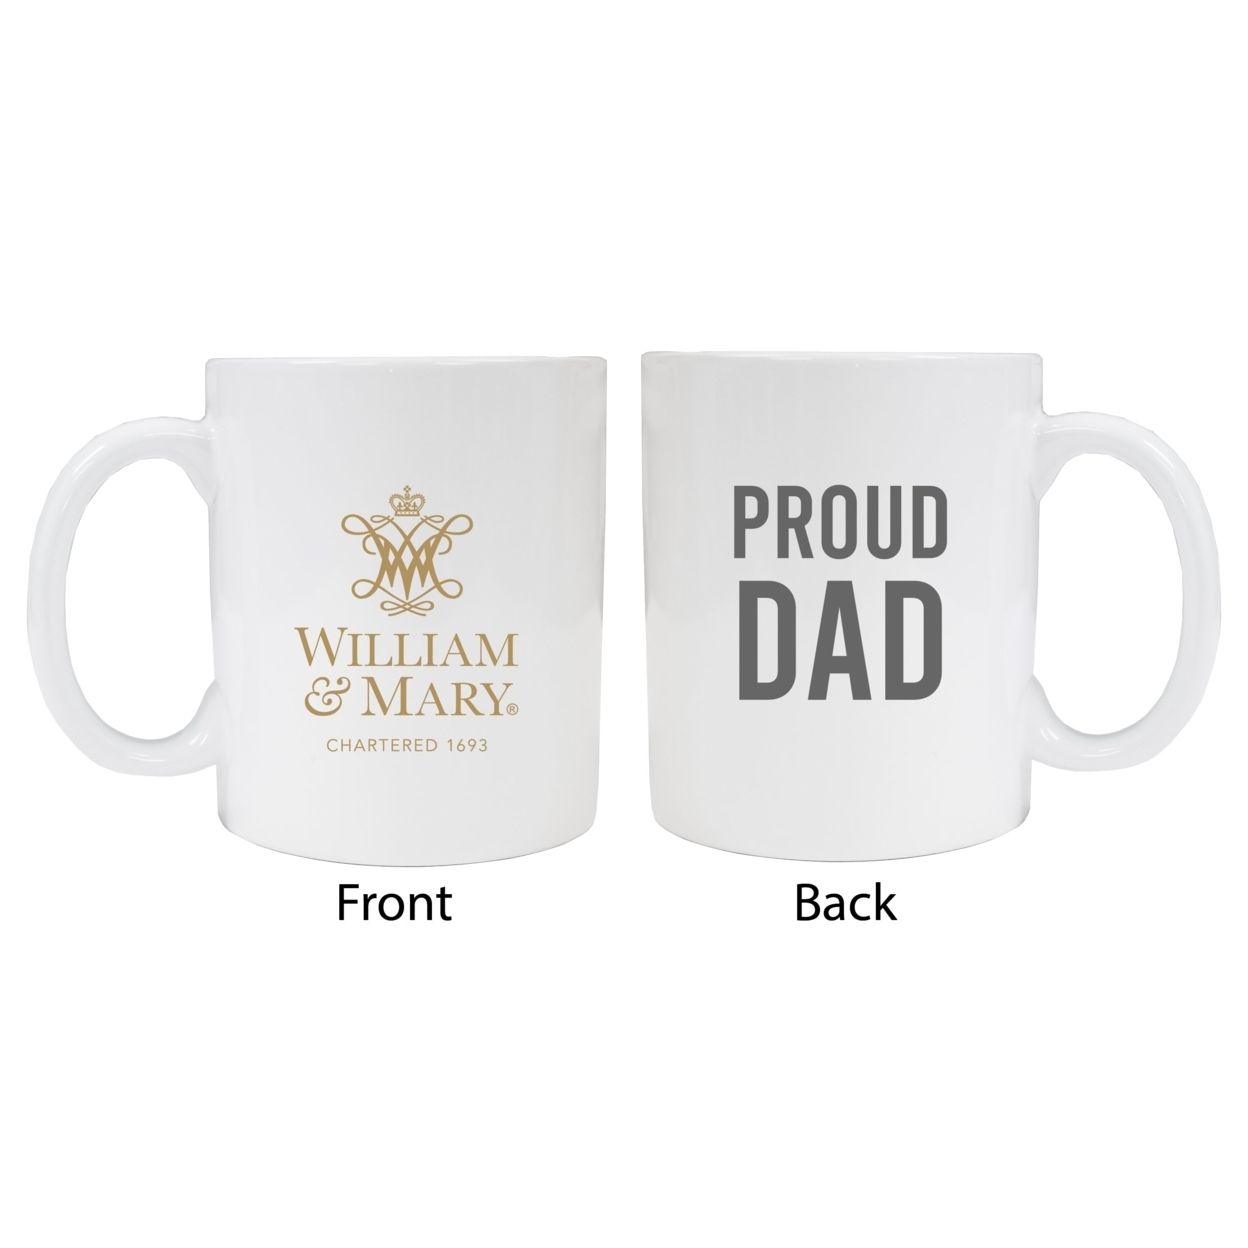 William And Mary Proud Dad Ceramic Coffee Mug - White